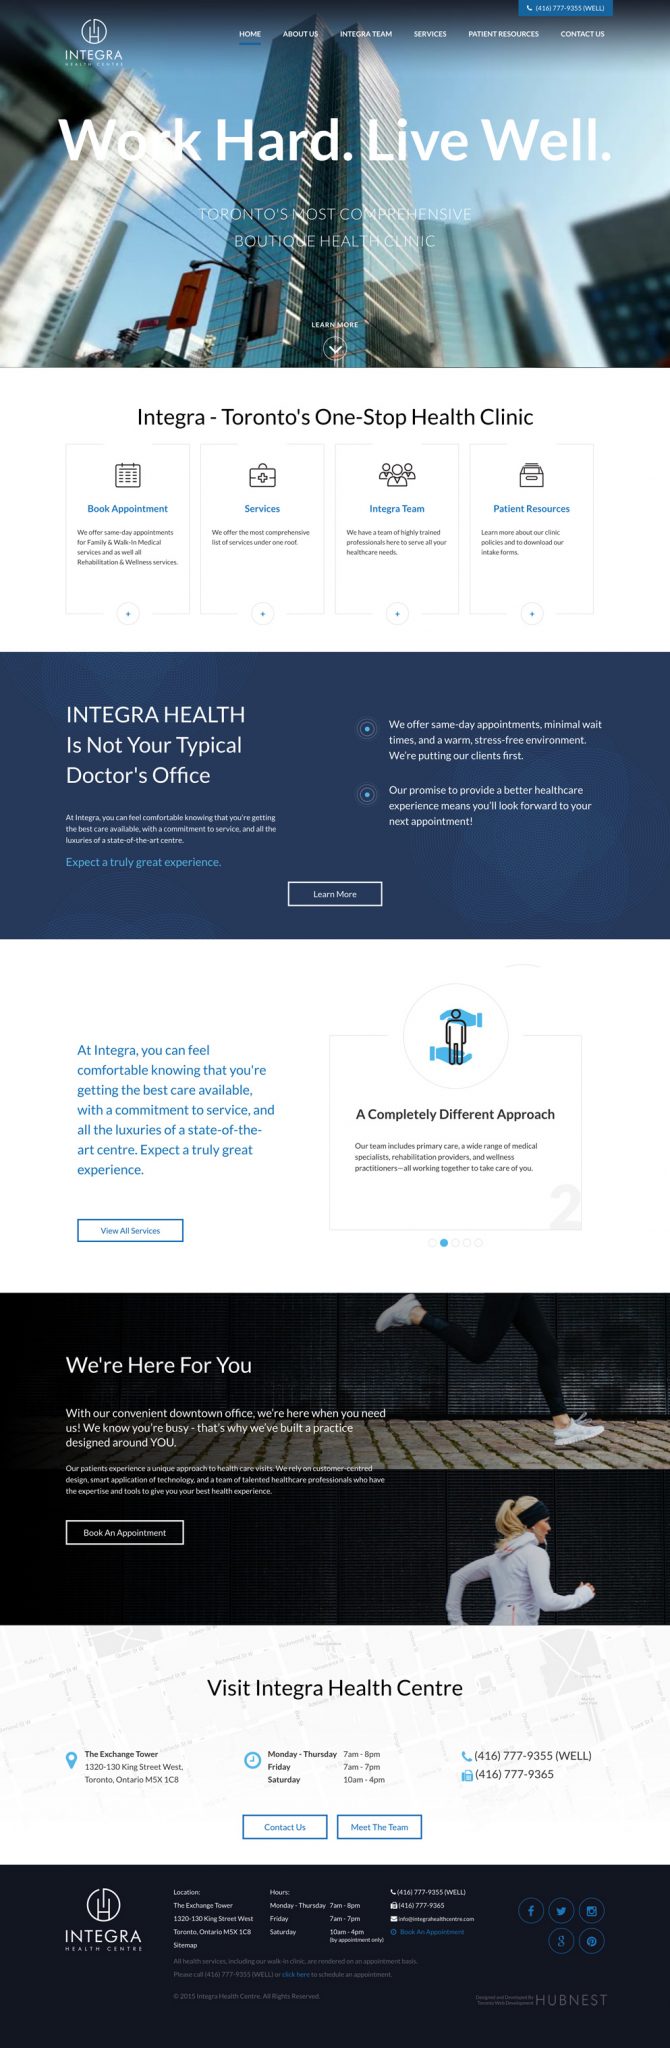 Integra - Medical Web Design Inspiration